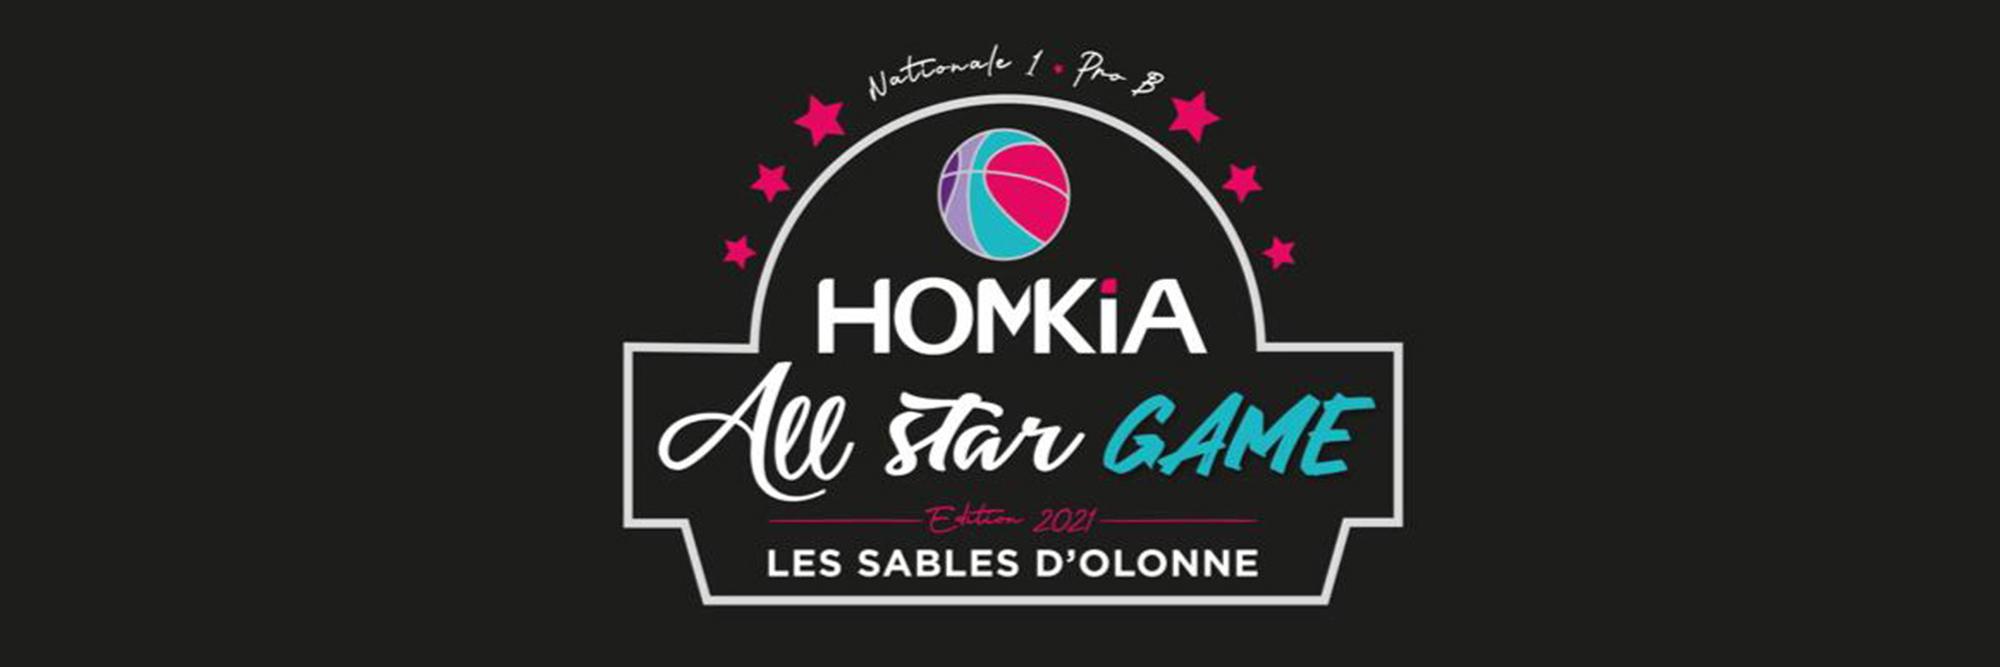 Partenariat - All Star Game HOMKIA